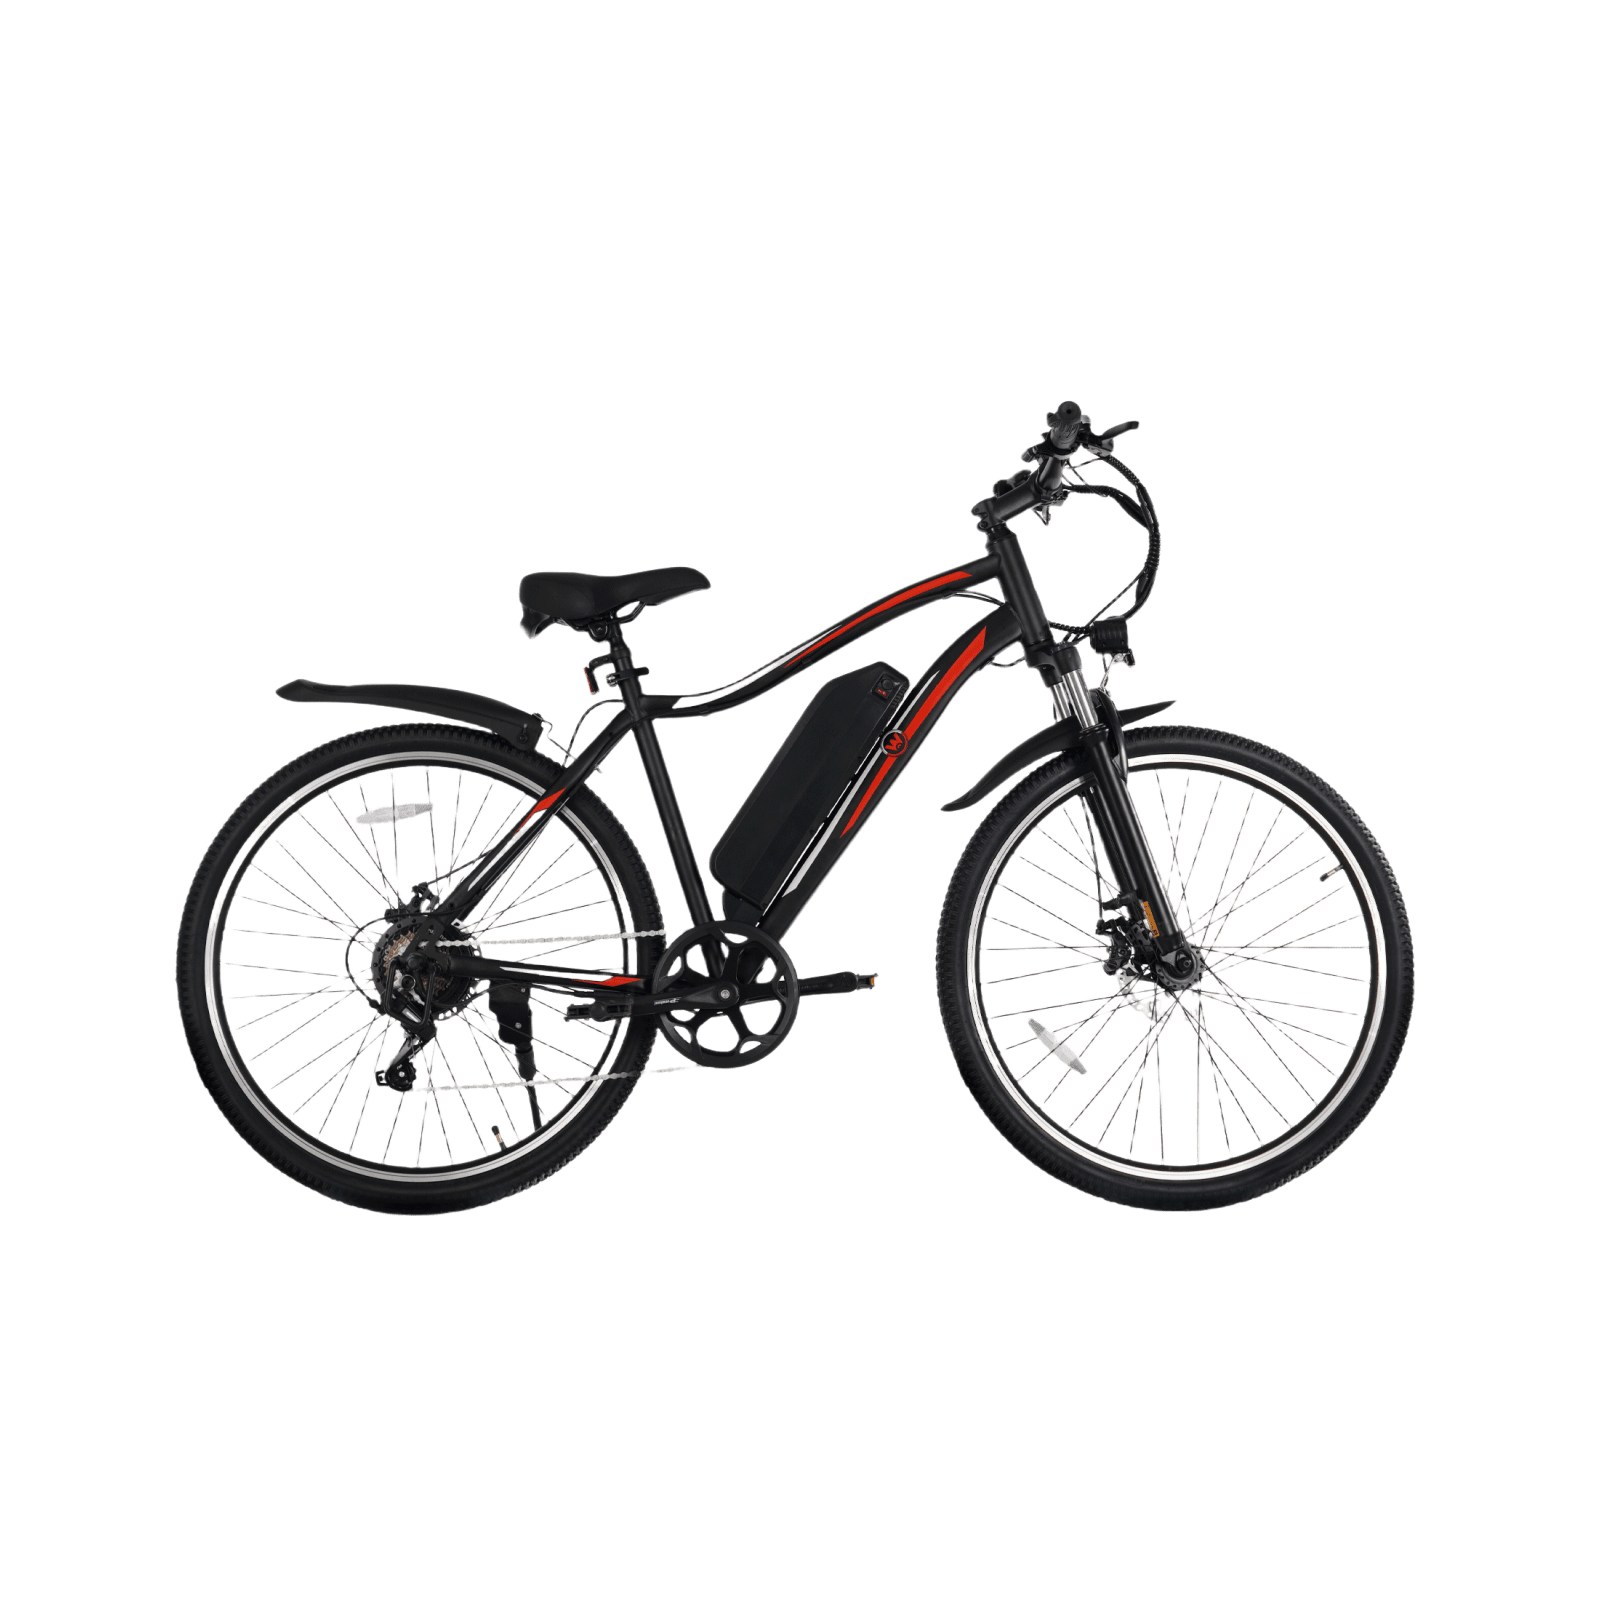 The Aries Mountain electric Bike 27.5 "has a range of 48 miles - C INVERTER Electric bike